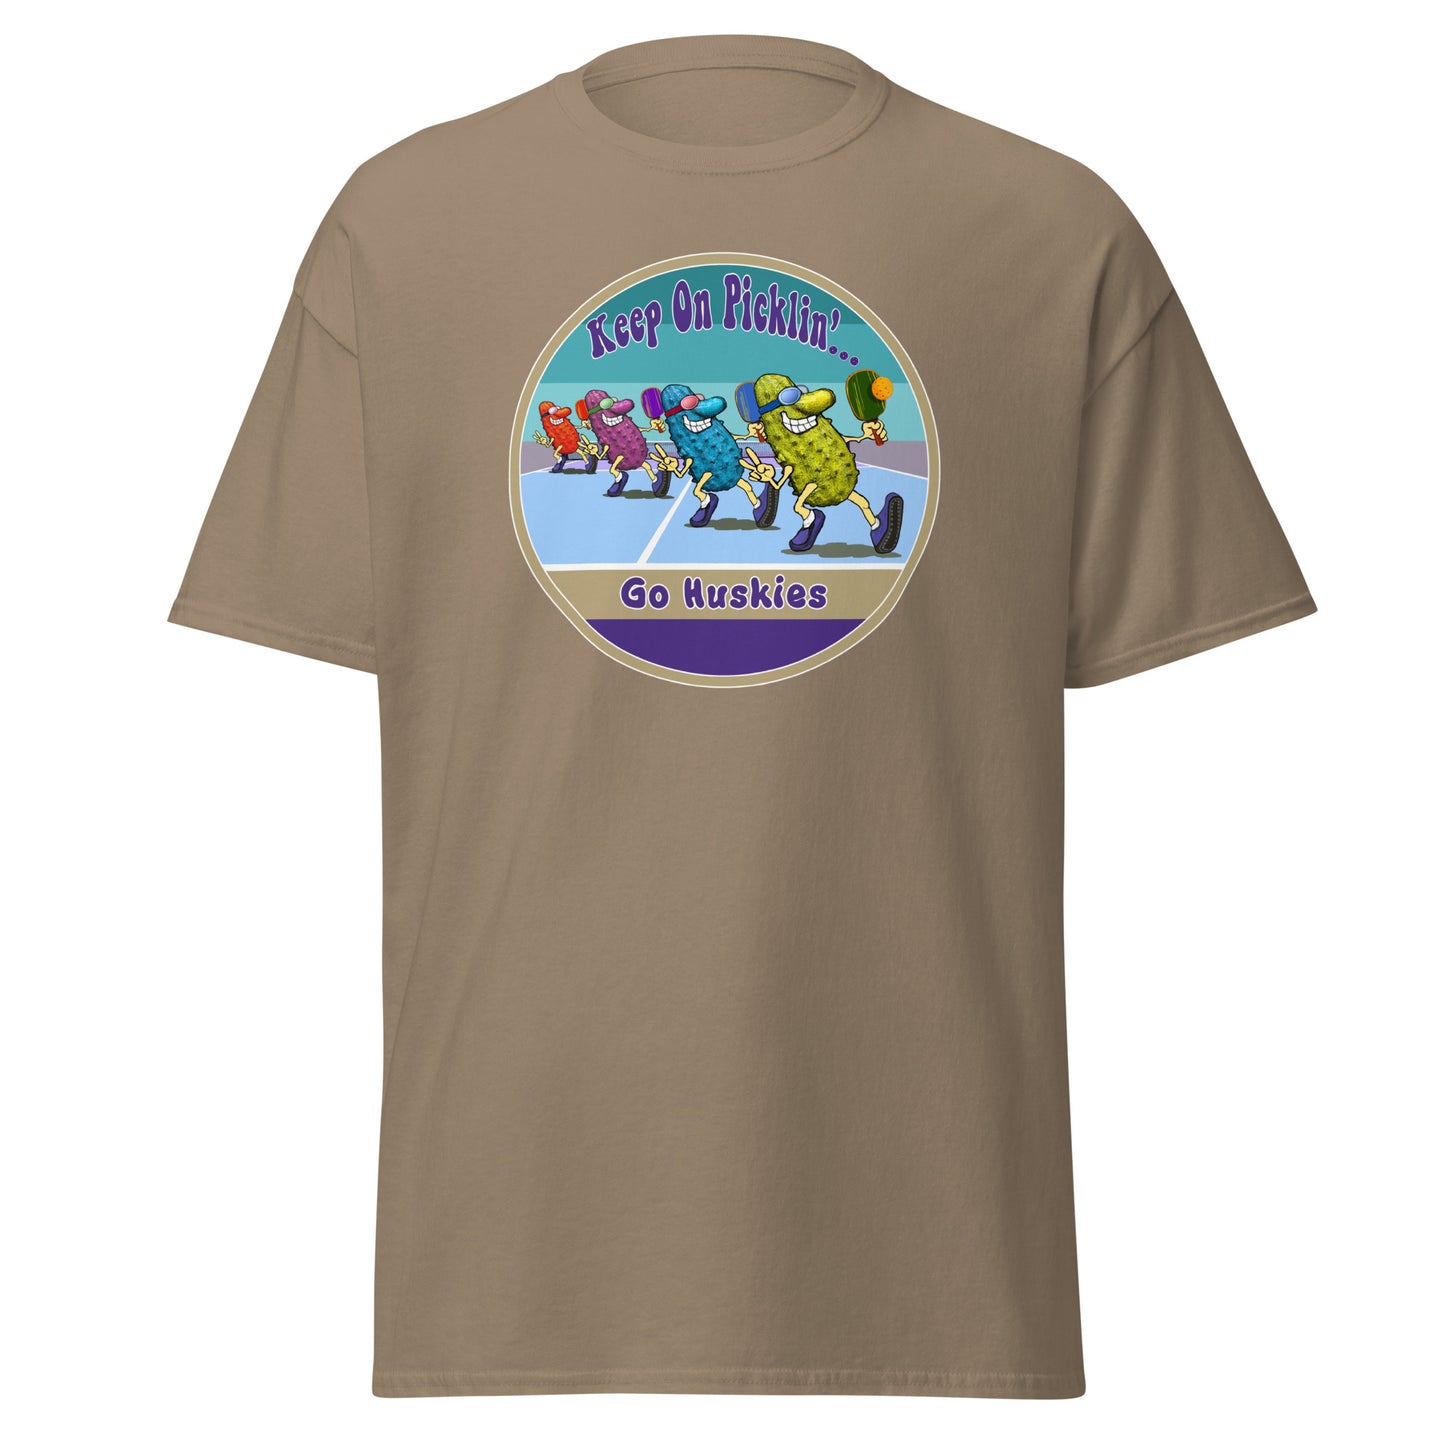 Washington Huskies Pickleball Shirt, Short-sleeve Tee, Retro Stripes Graphic